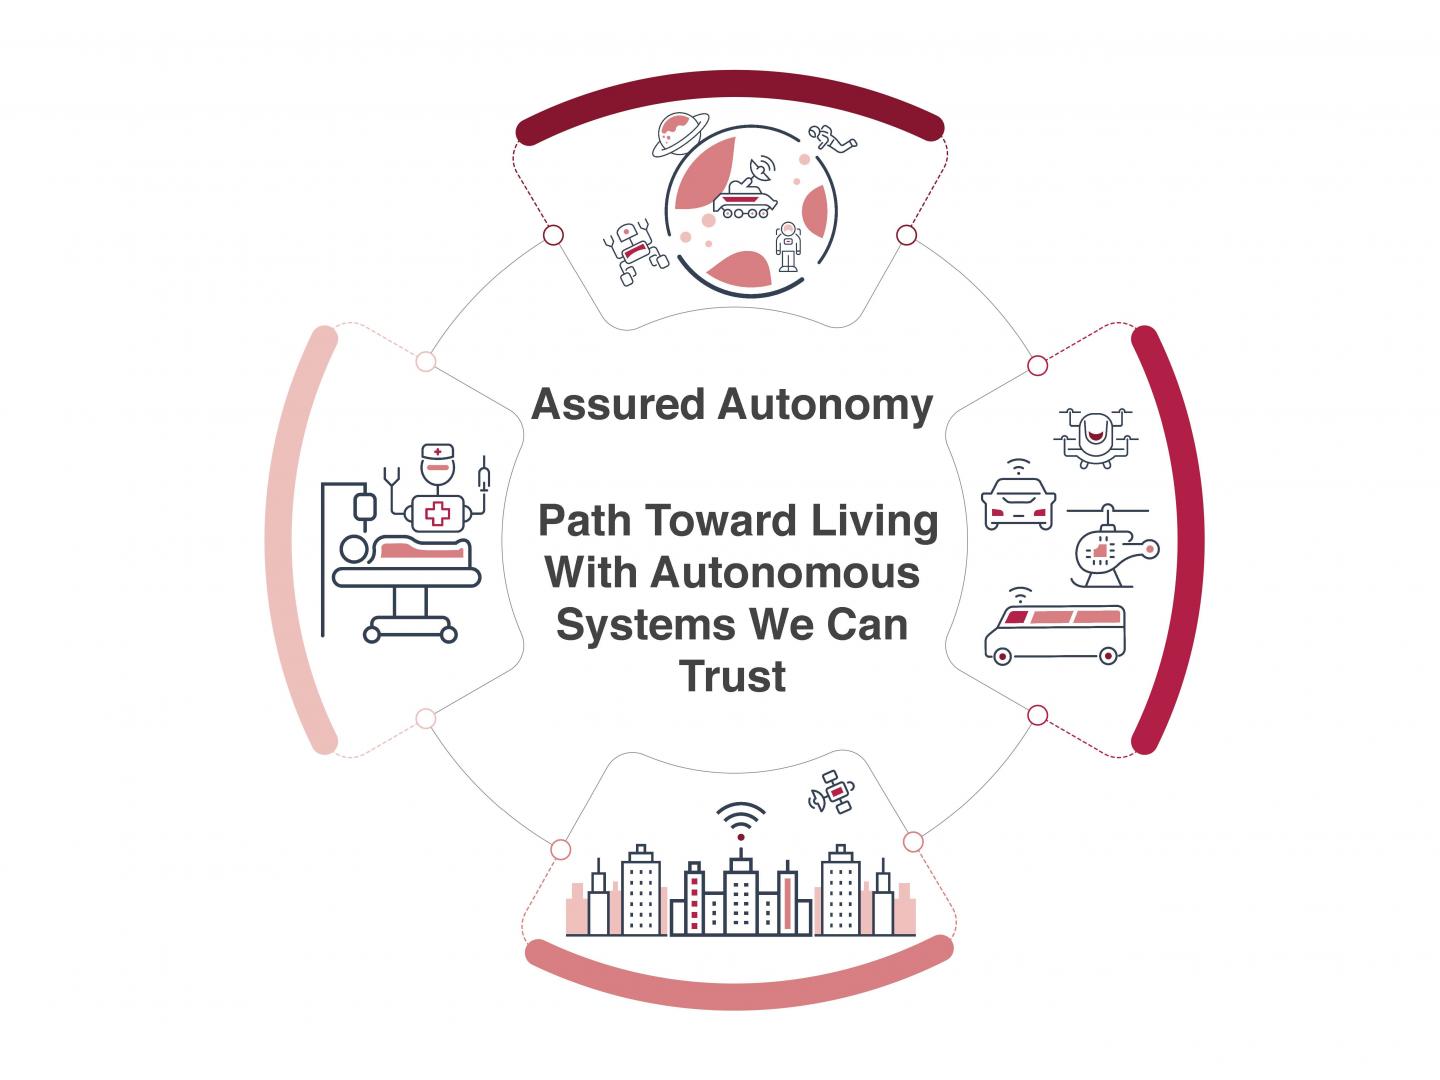 Assured Autonomy: Path Toward Living With Autonomous Systems We Can Trust